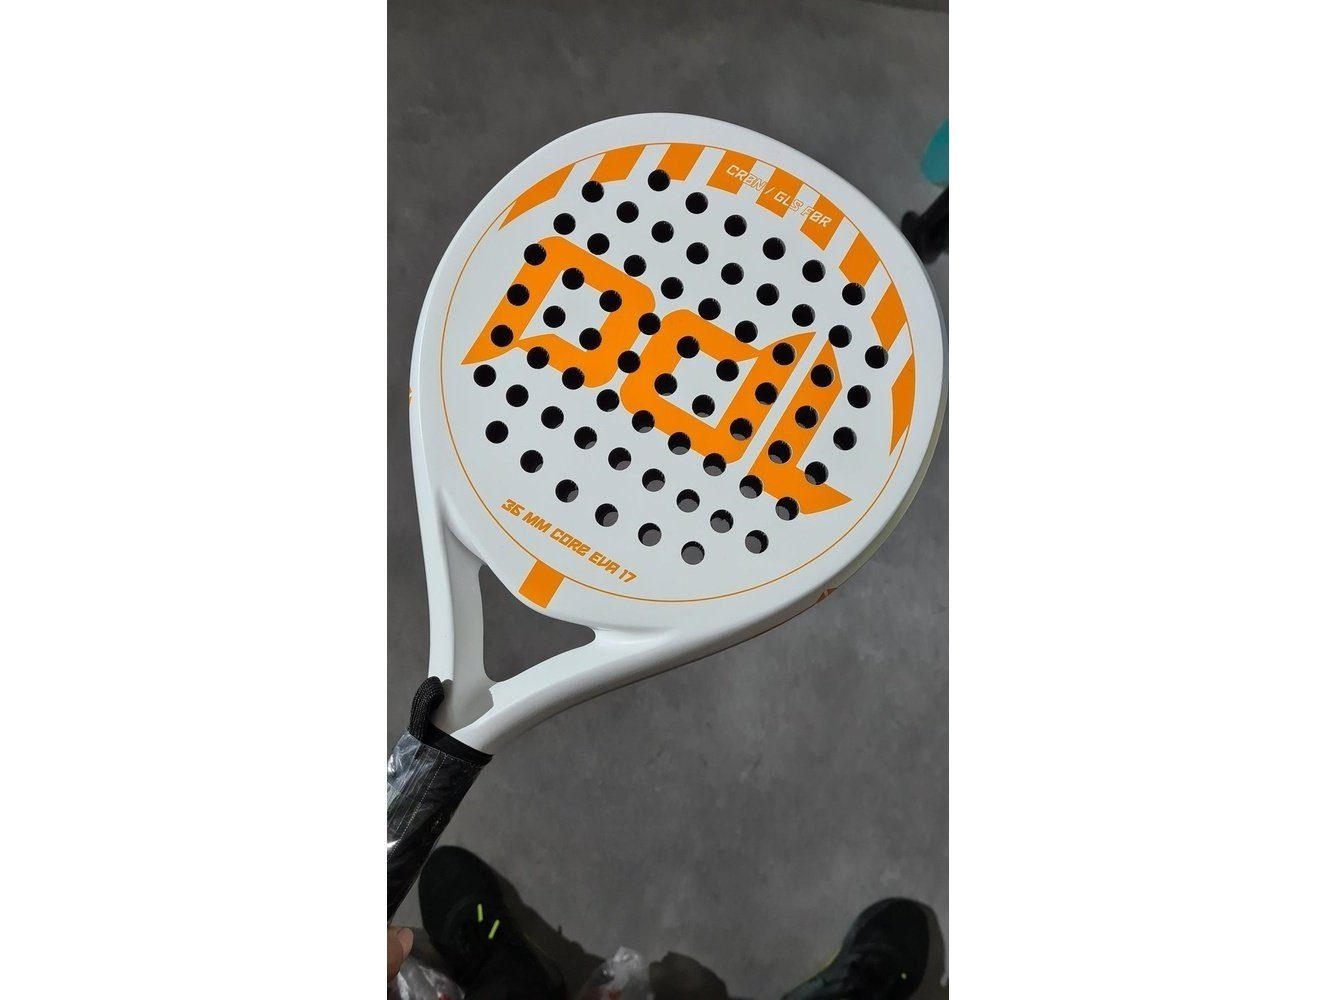 Tennis Padle Racket